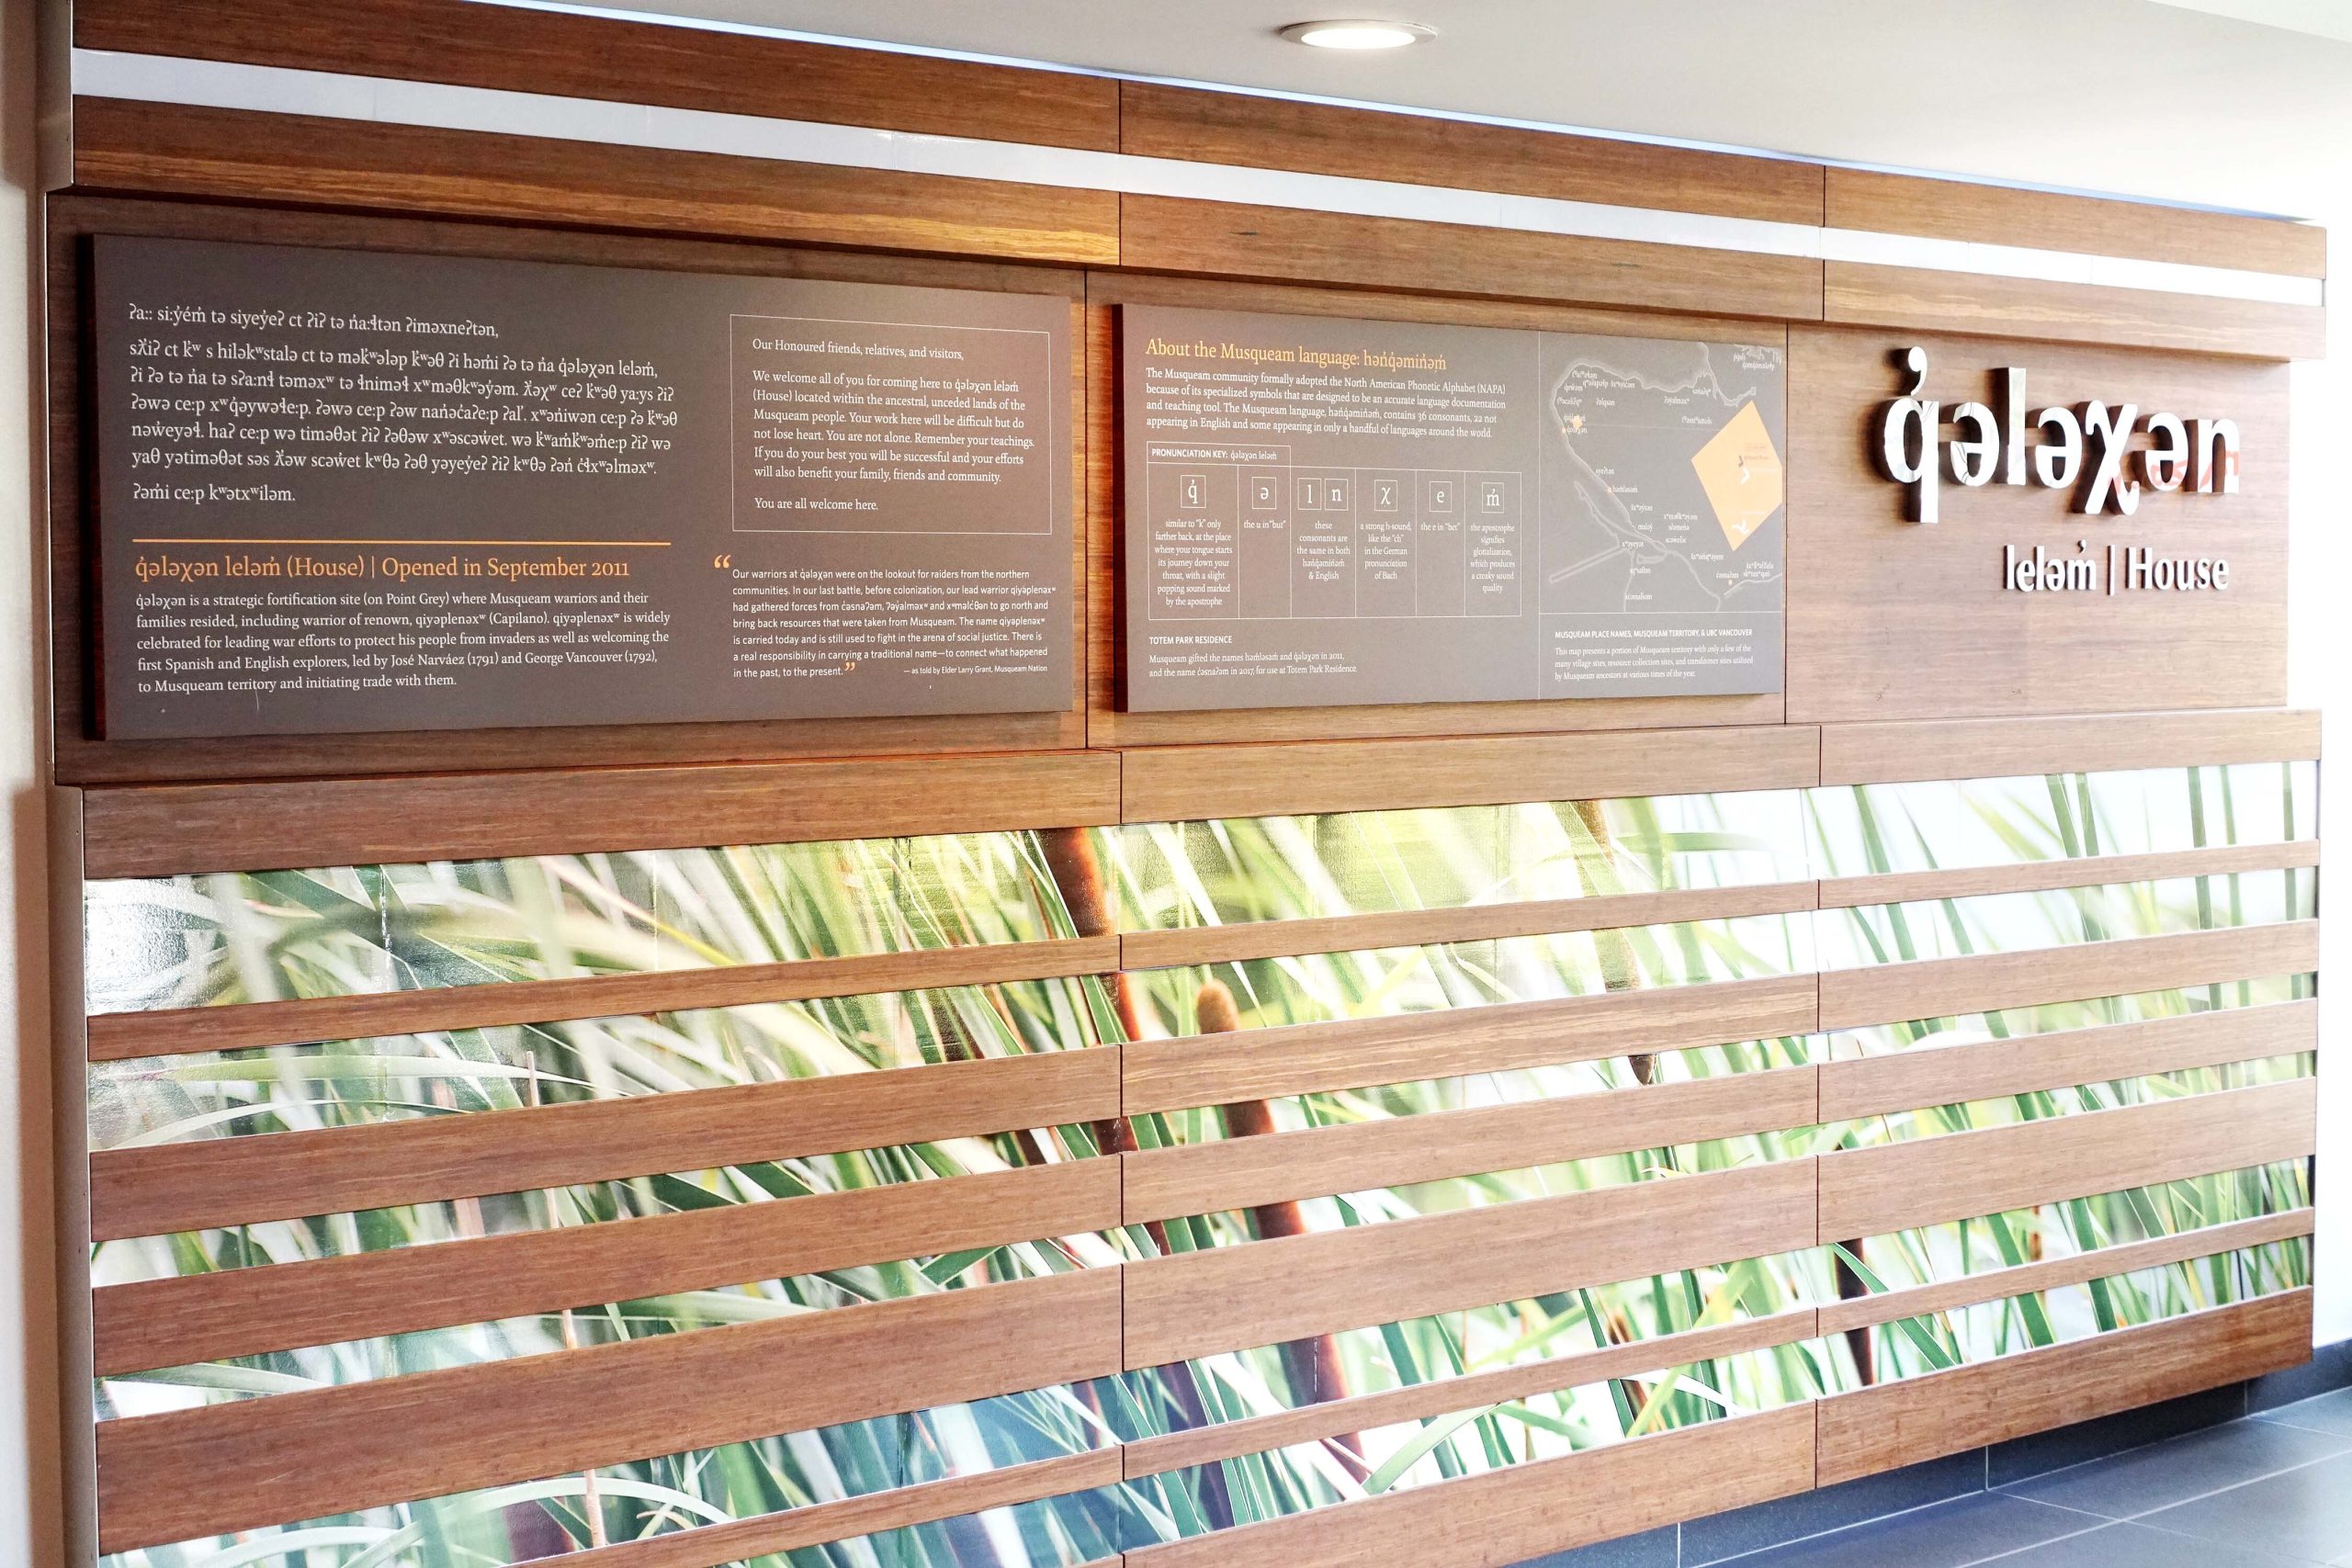 Totem Park q̓ələχən House Lobby Storytelling Display